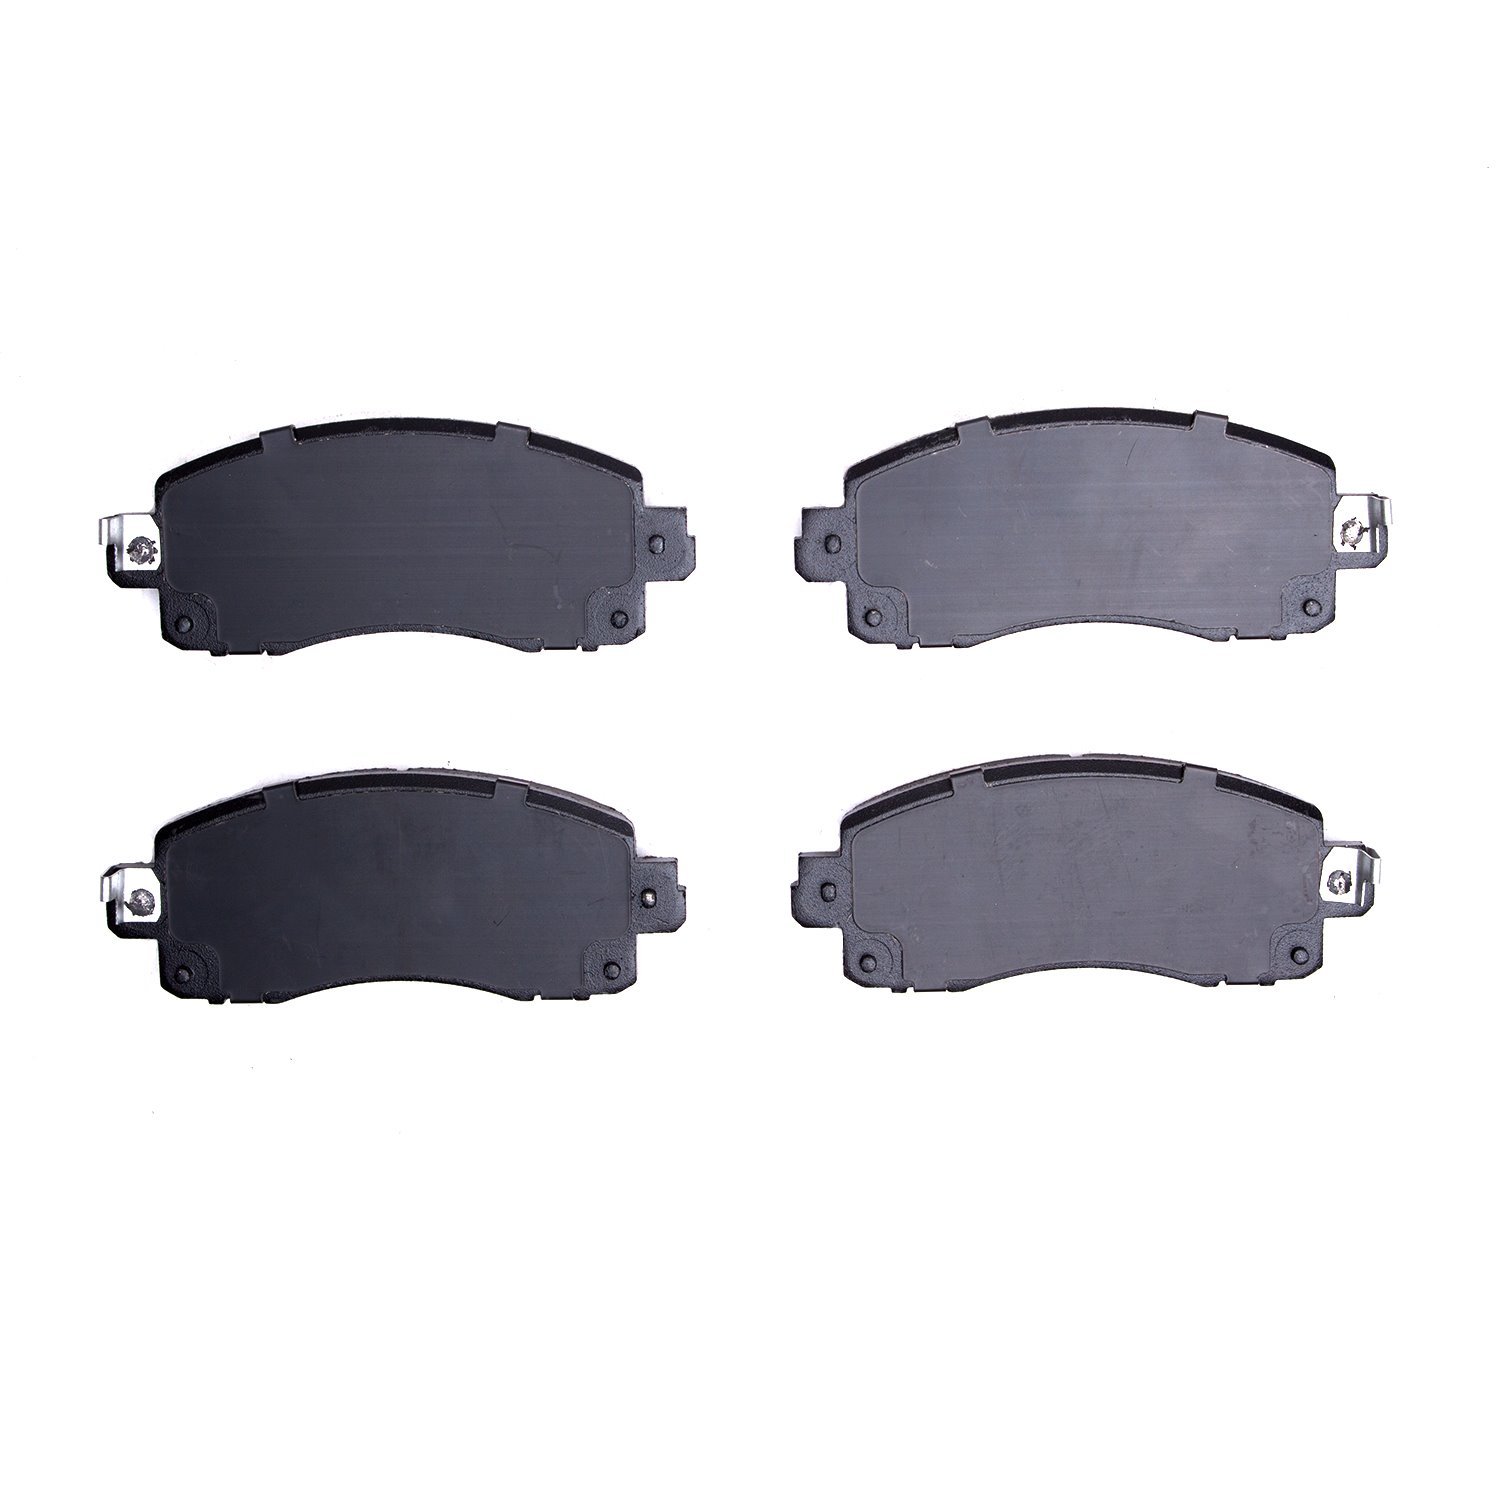 1552-2045-00 5000 Advanced Ceramic Brake Pads, Fits Select Subaru, Position: Front